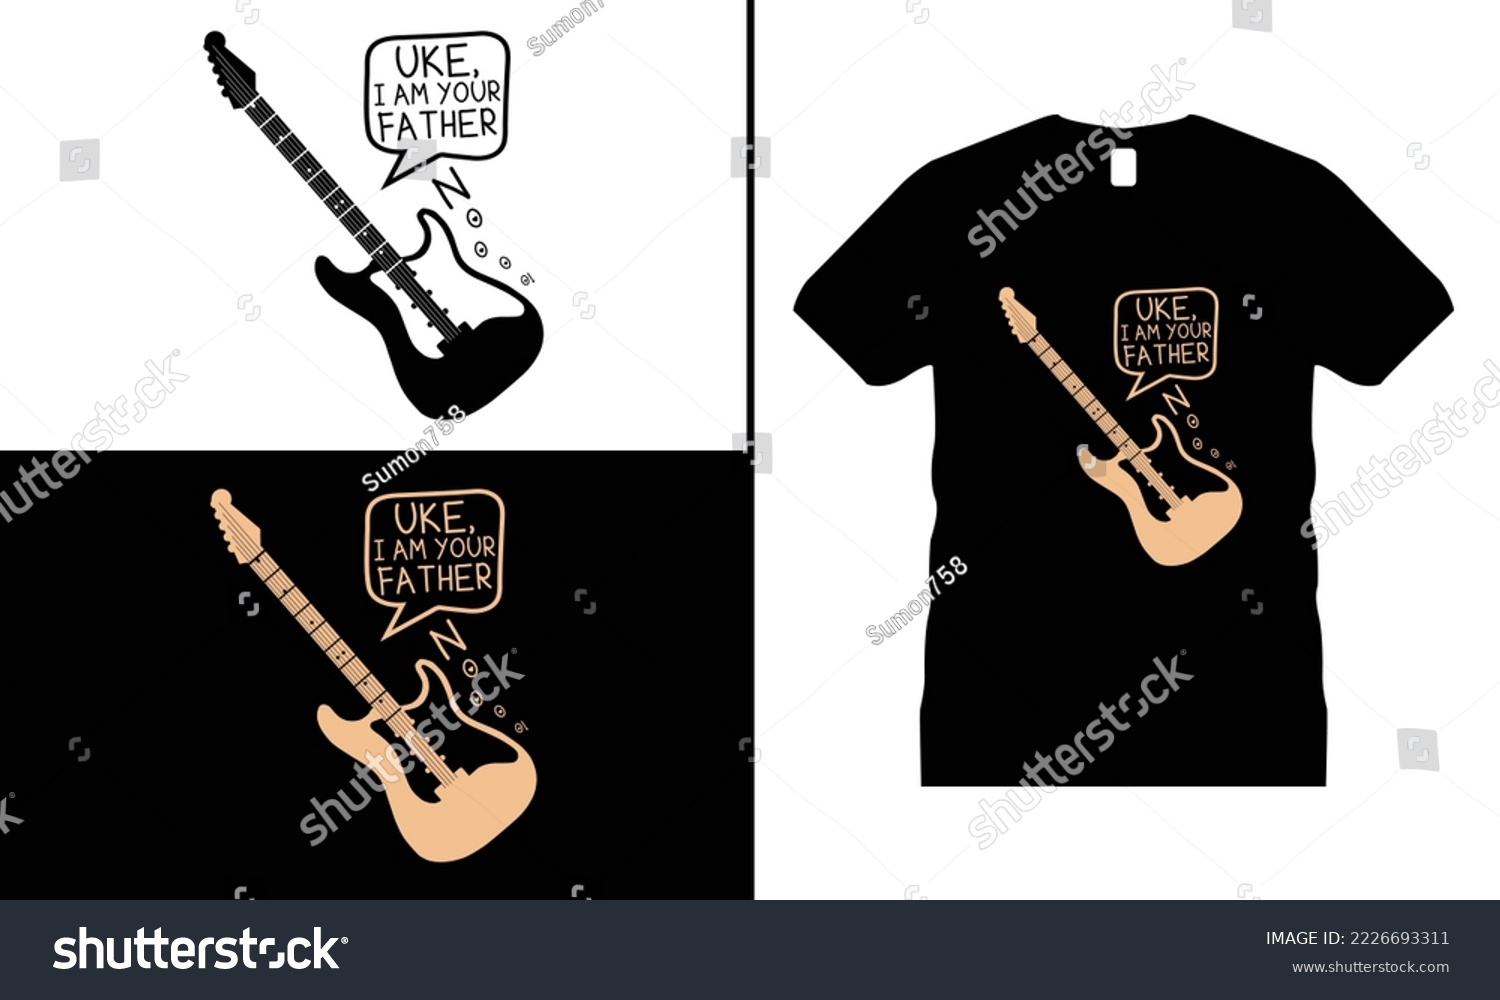 SVG of Music Motivational T-shirt Design vector. Use for T-Shirt, mugs, stickers, etc. svg